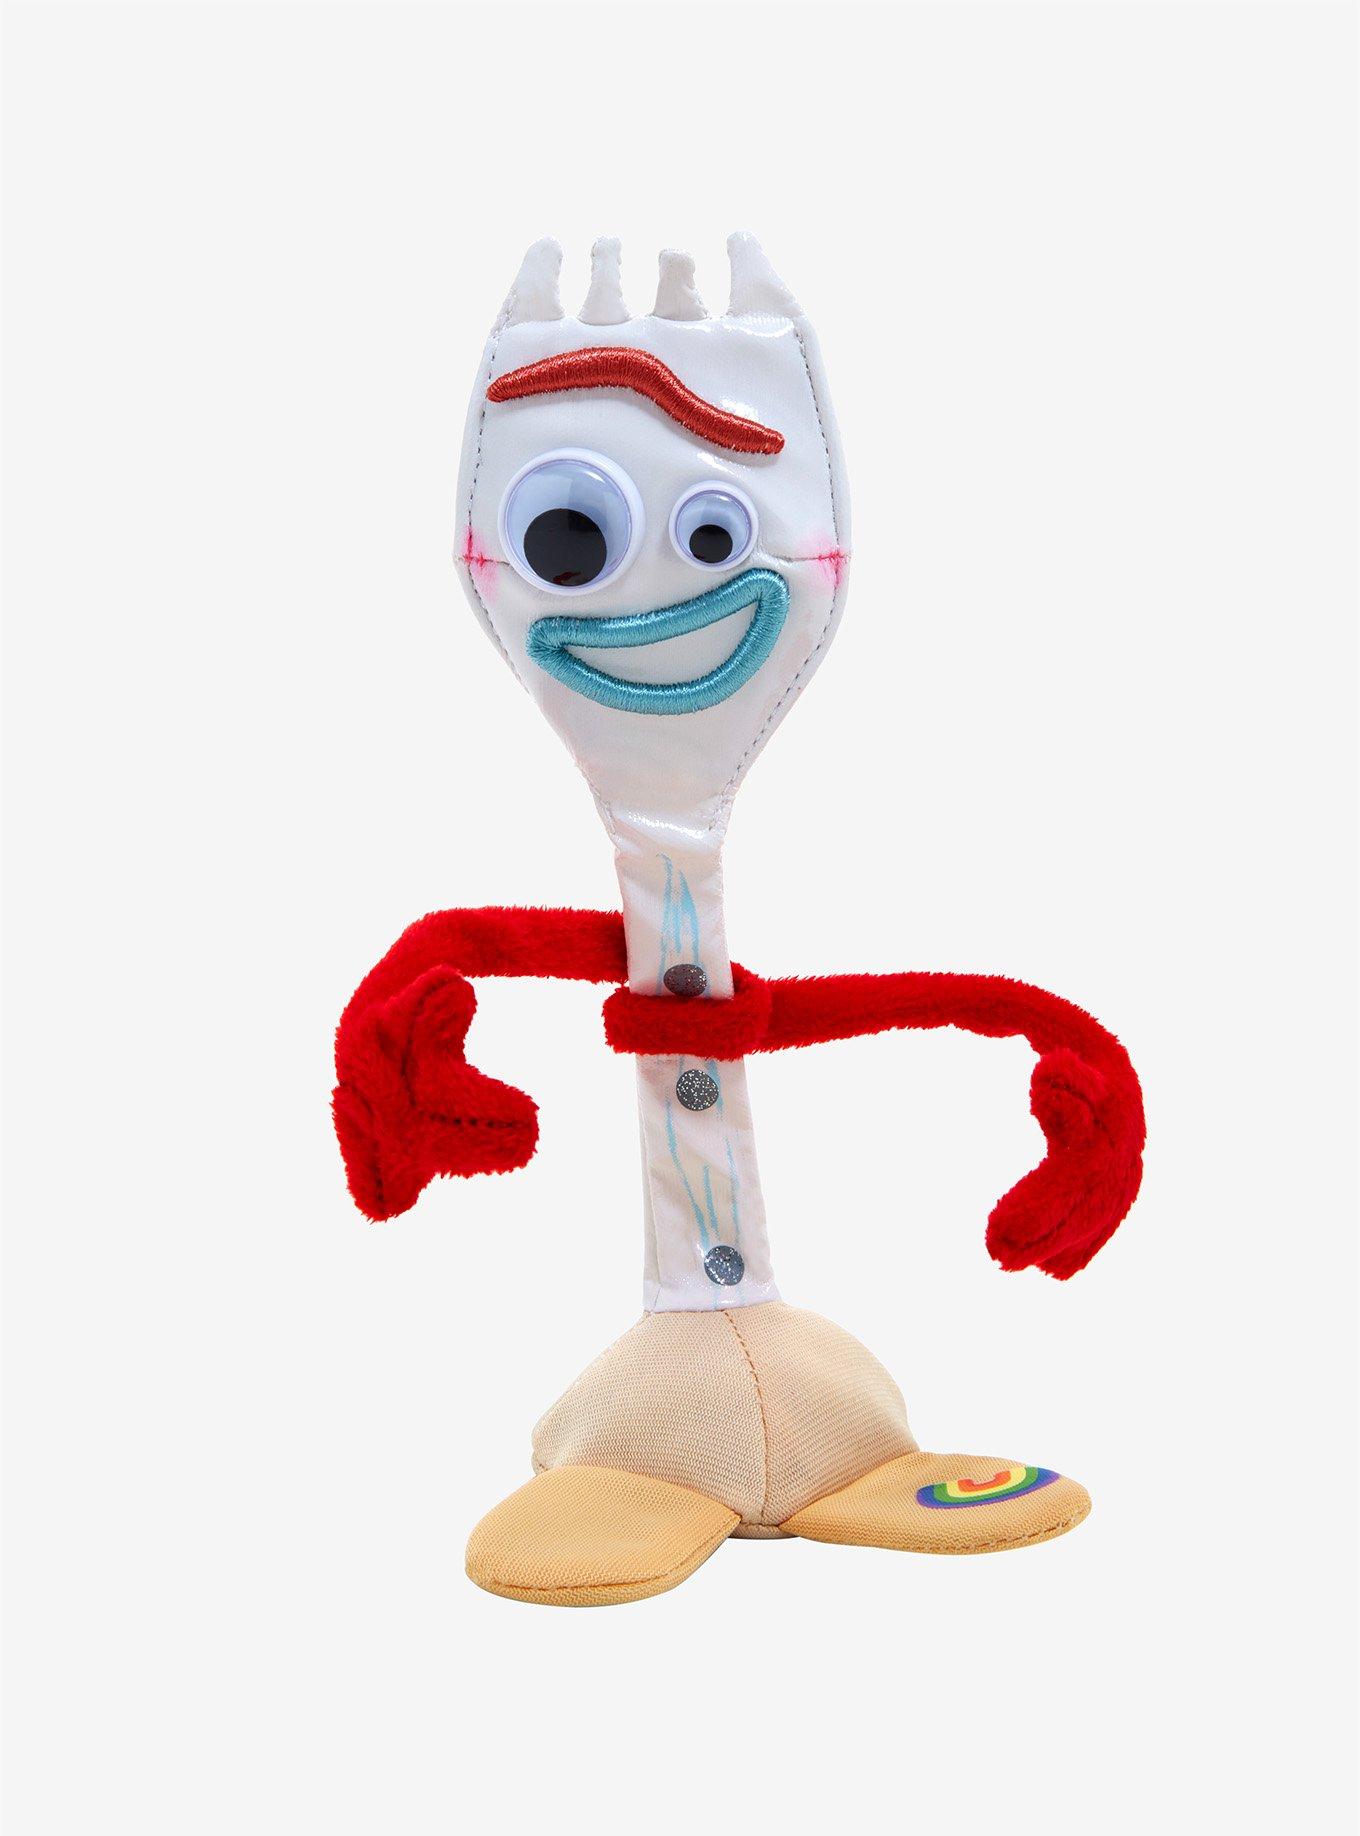 Disney Pixar Toy Story 4 Forky Plush